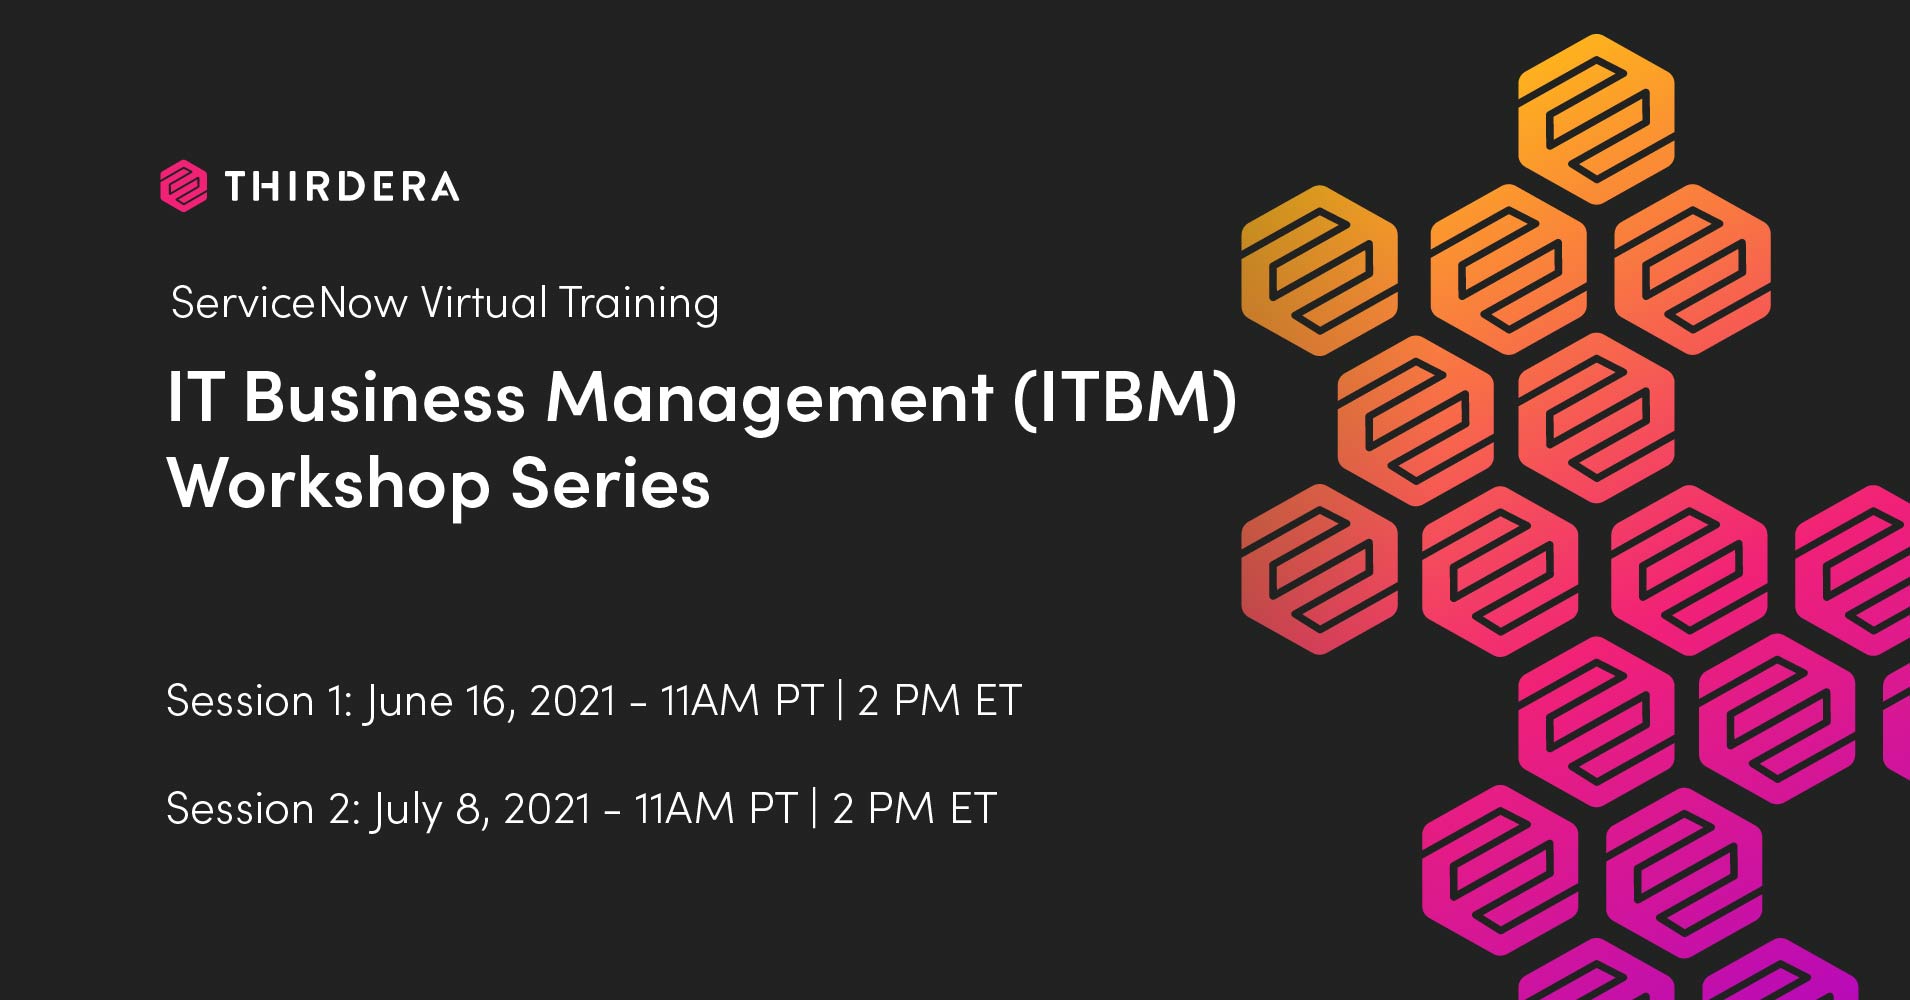 ServiceNow Virtual Training: IT Business Management (ITBM) Workshop Series